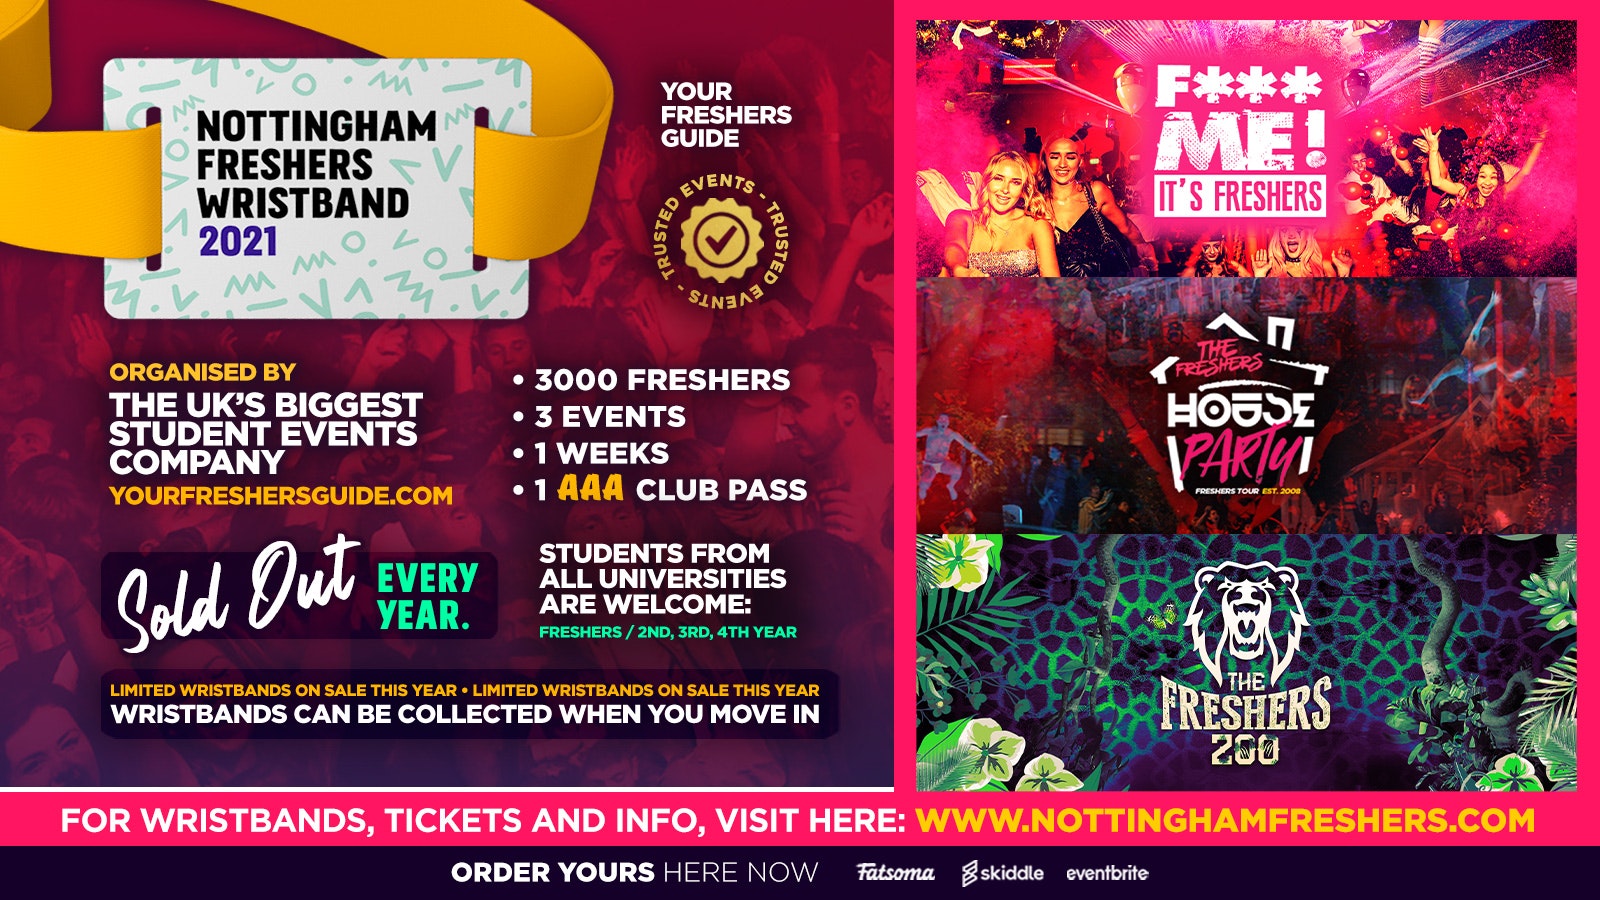 Nottingham Freshers Wristband 2021 – Returners Tickets!